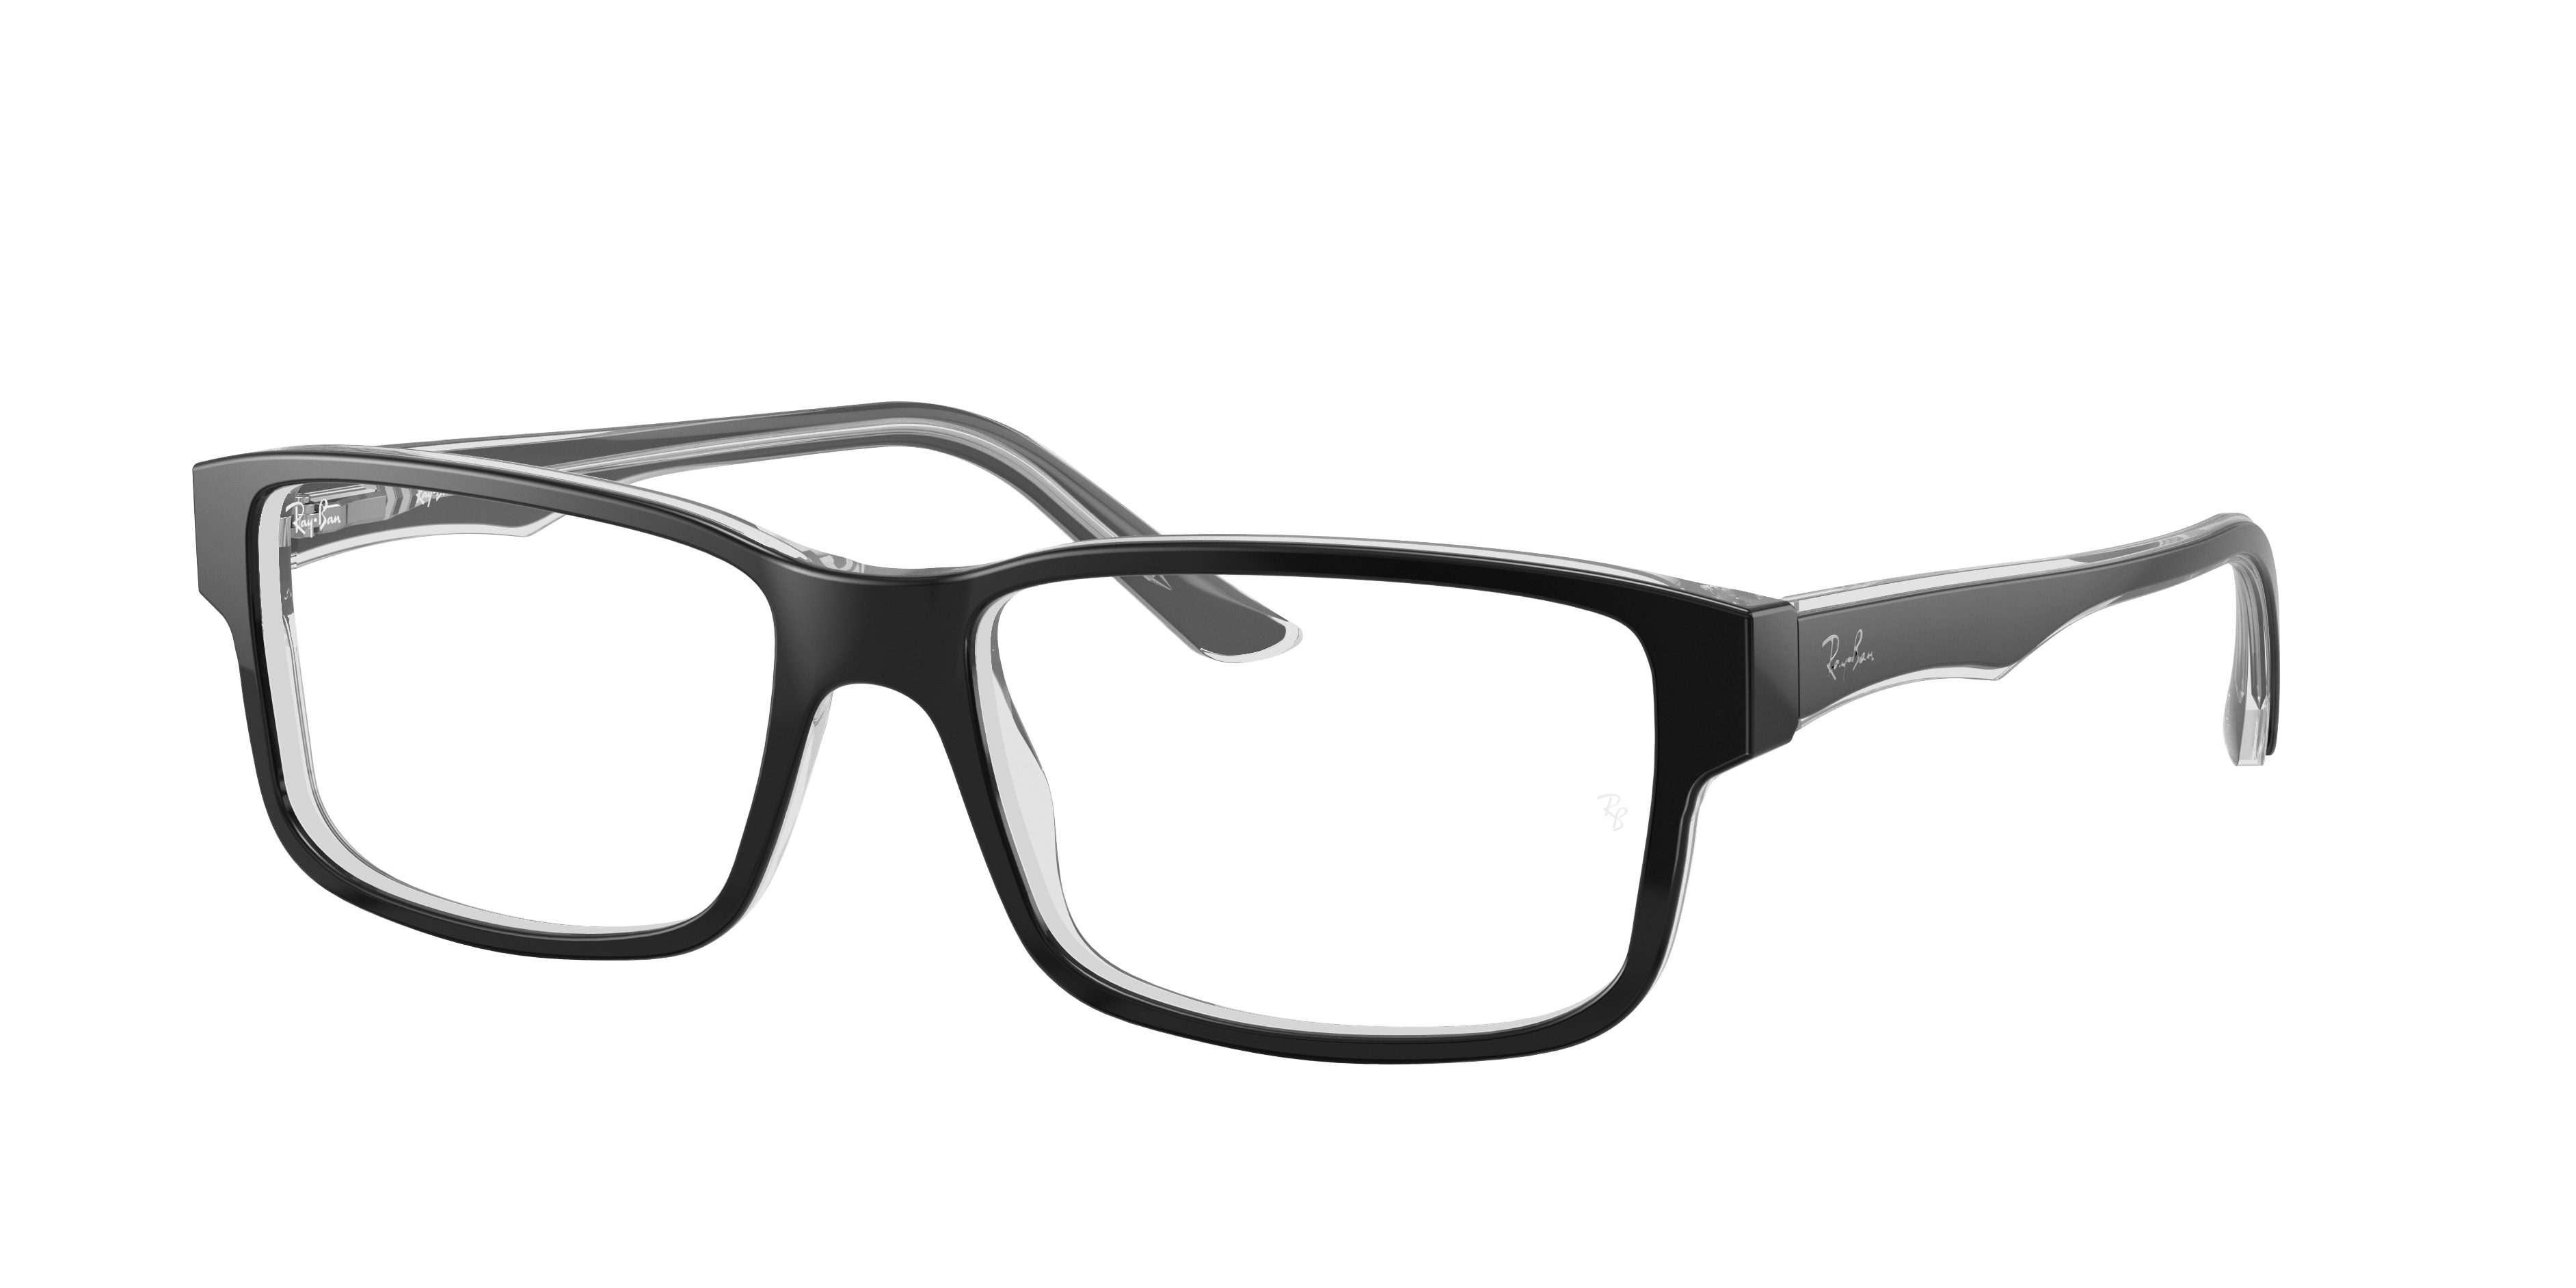 Ray-Ban RB5245 Optics Black On Transparent Eyeglasses | Glasses.com ...